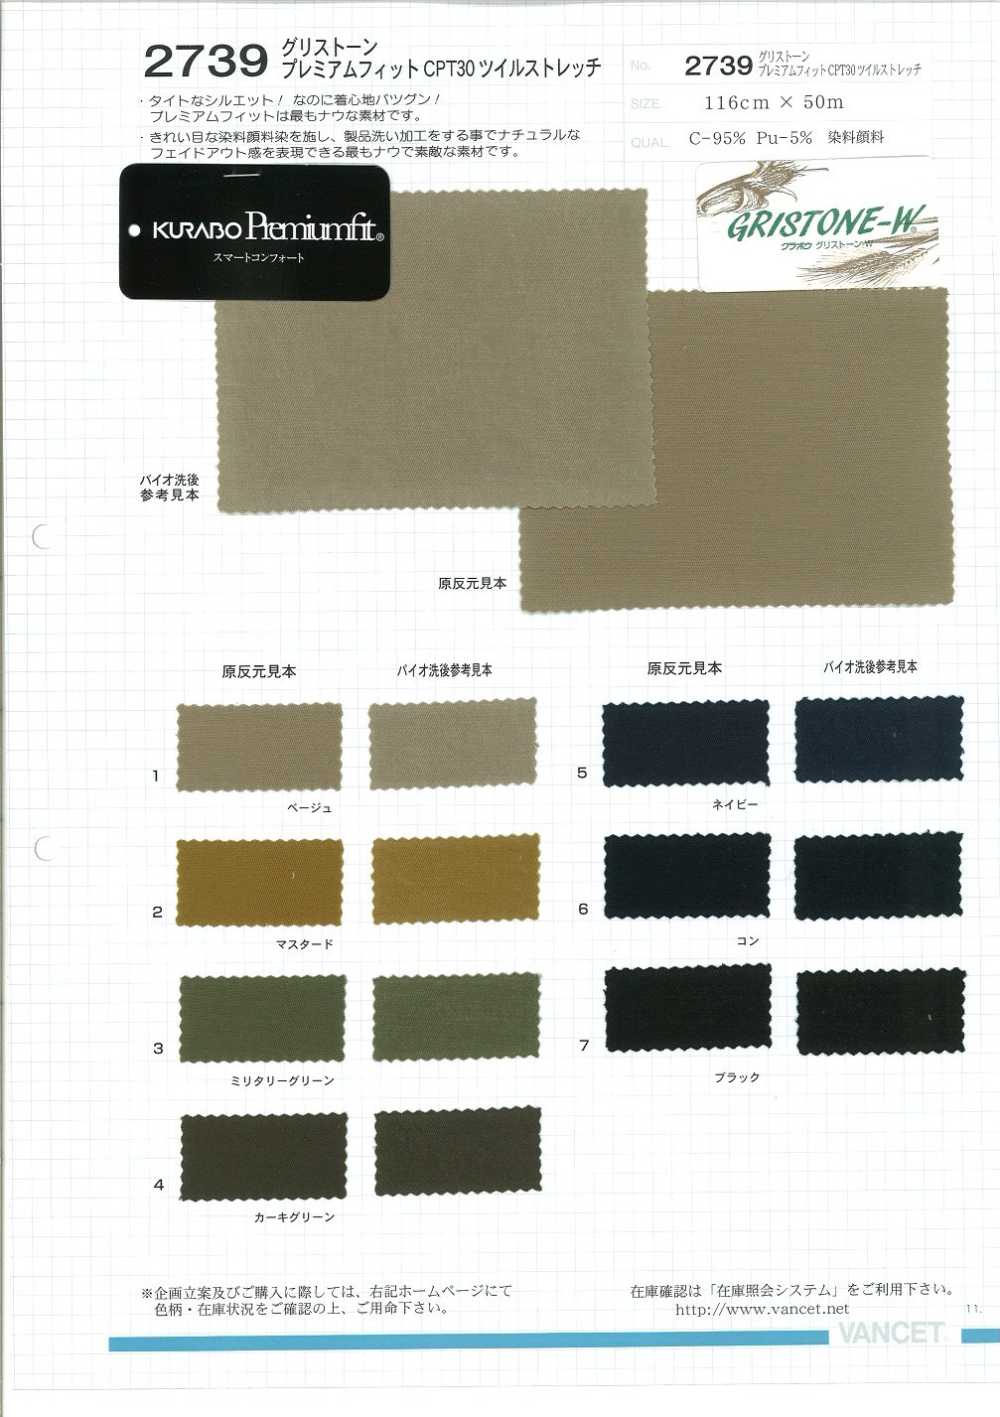 2739 Grisstone Premium Fit CPT30 Twill Stretch[Fabrica Textil] VANCET